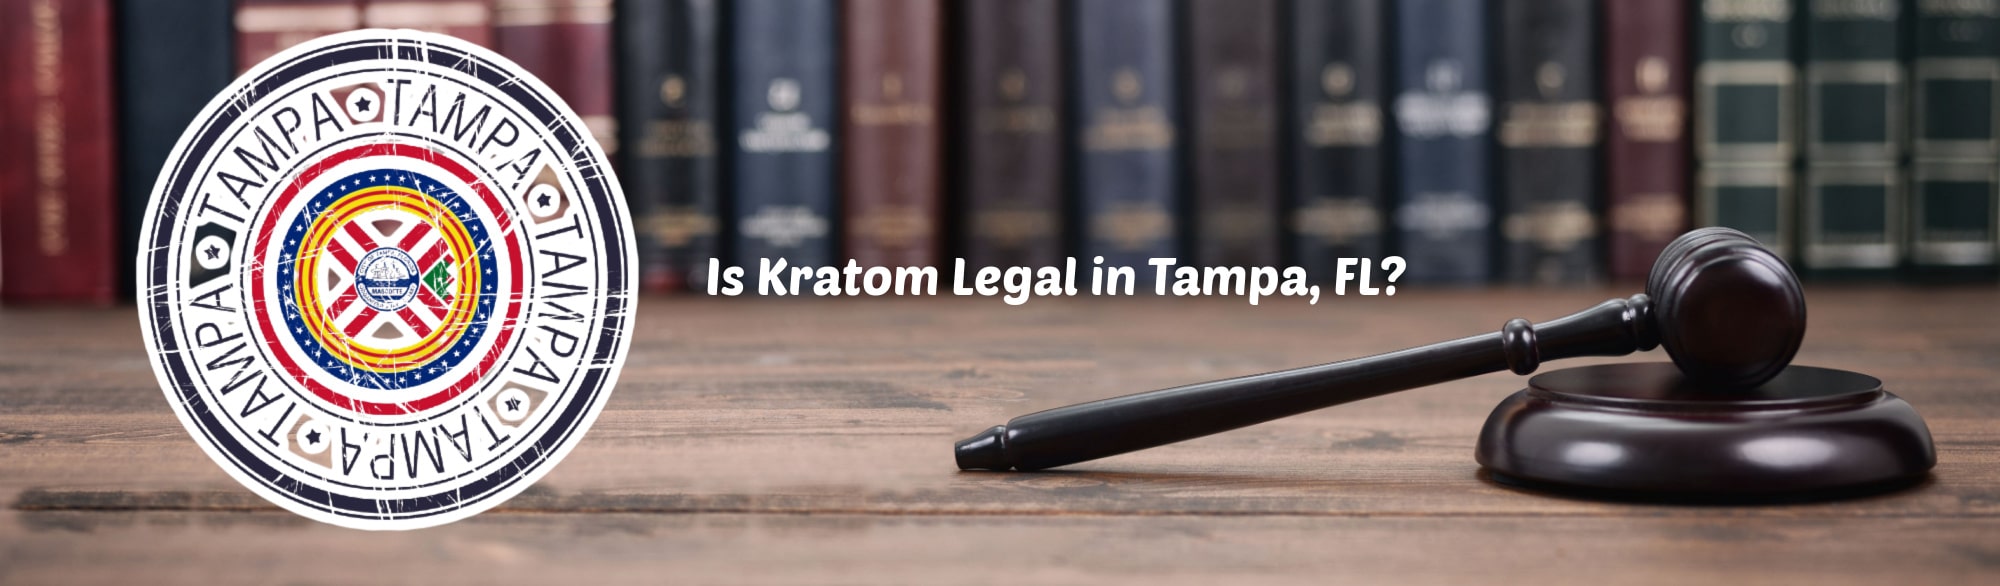 image of is kratom legal in tampa fl